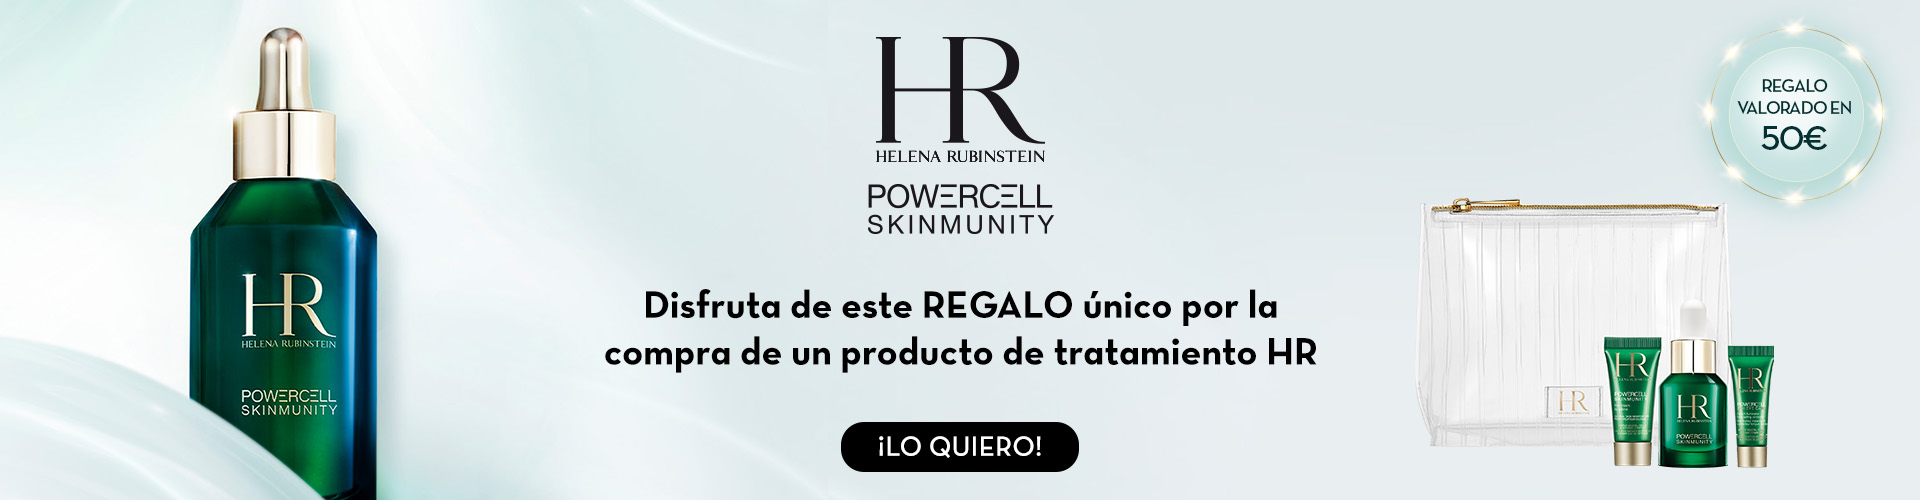 Helena Rubinstein | Promo Regalo por Compra | Prieto.es